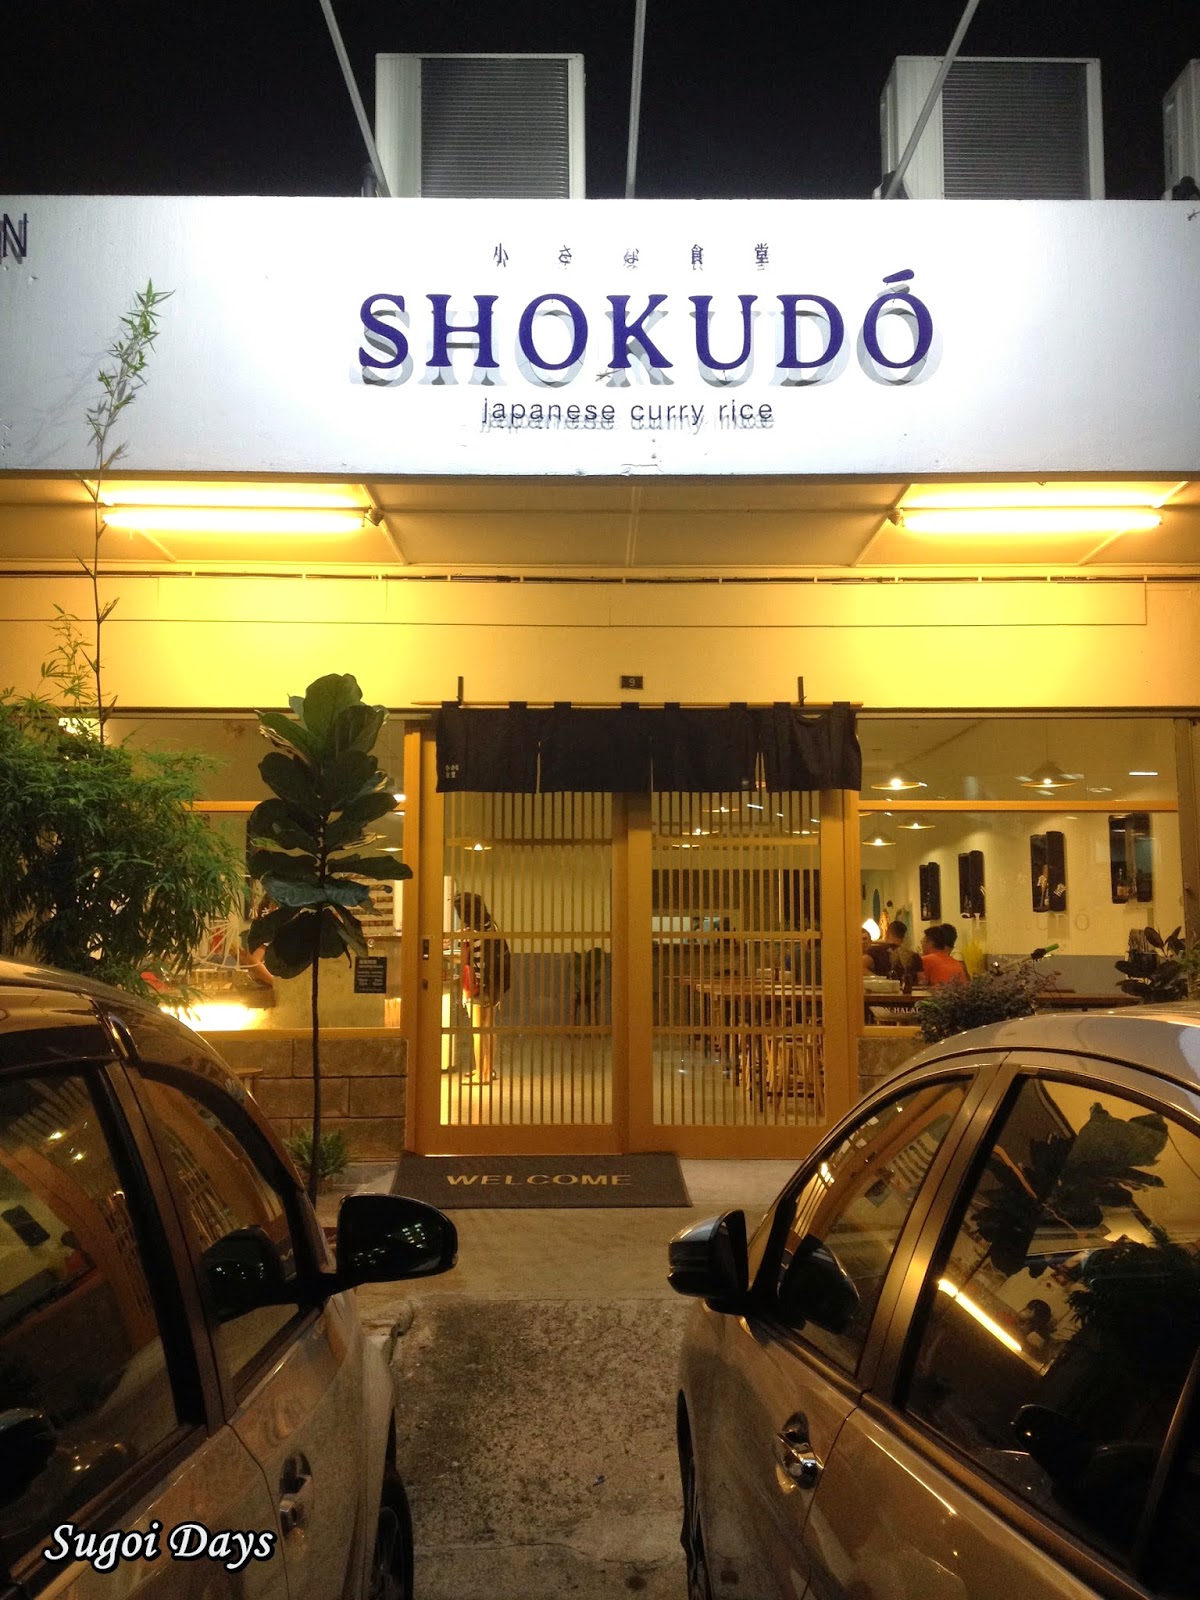 Sugoi Days: Shokudo Japanese Curry Rice, Seapark review